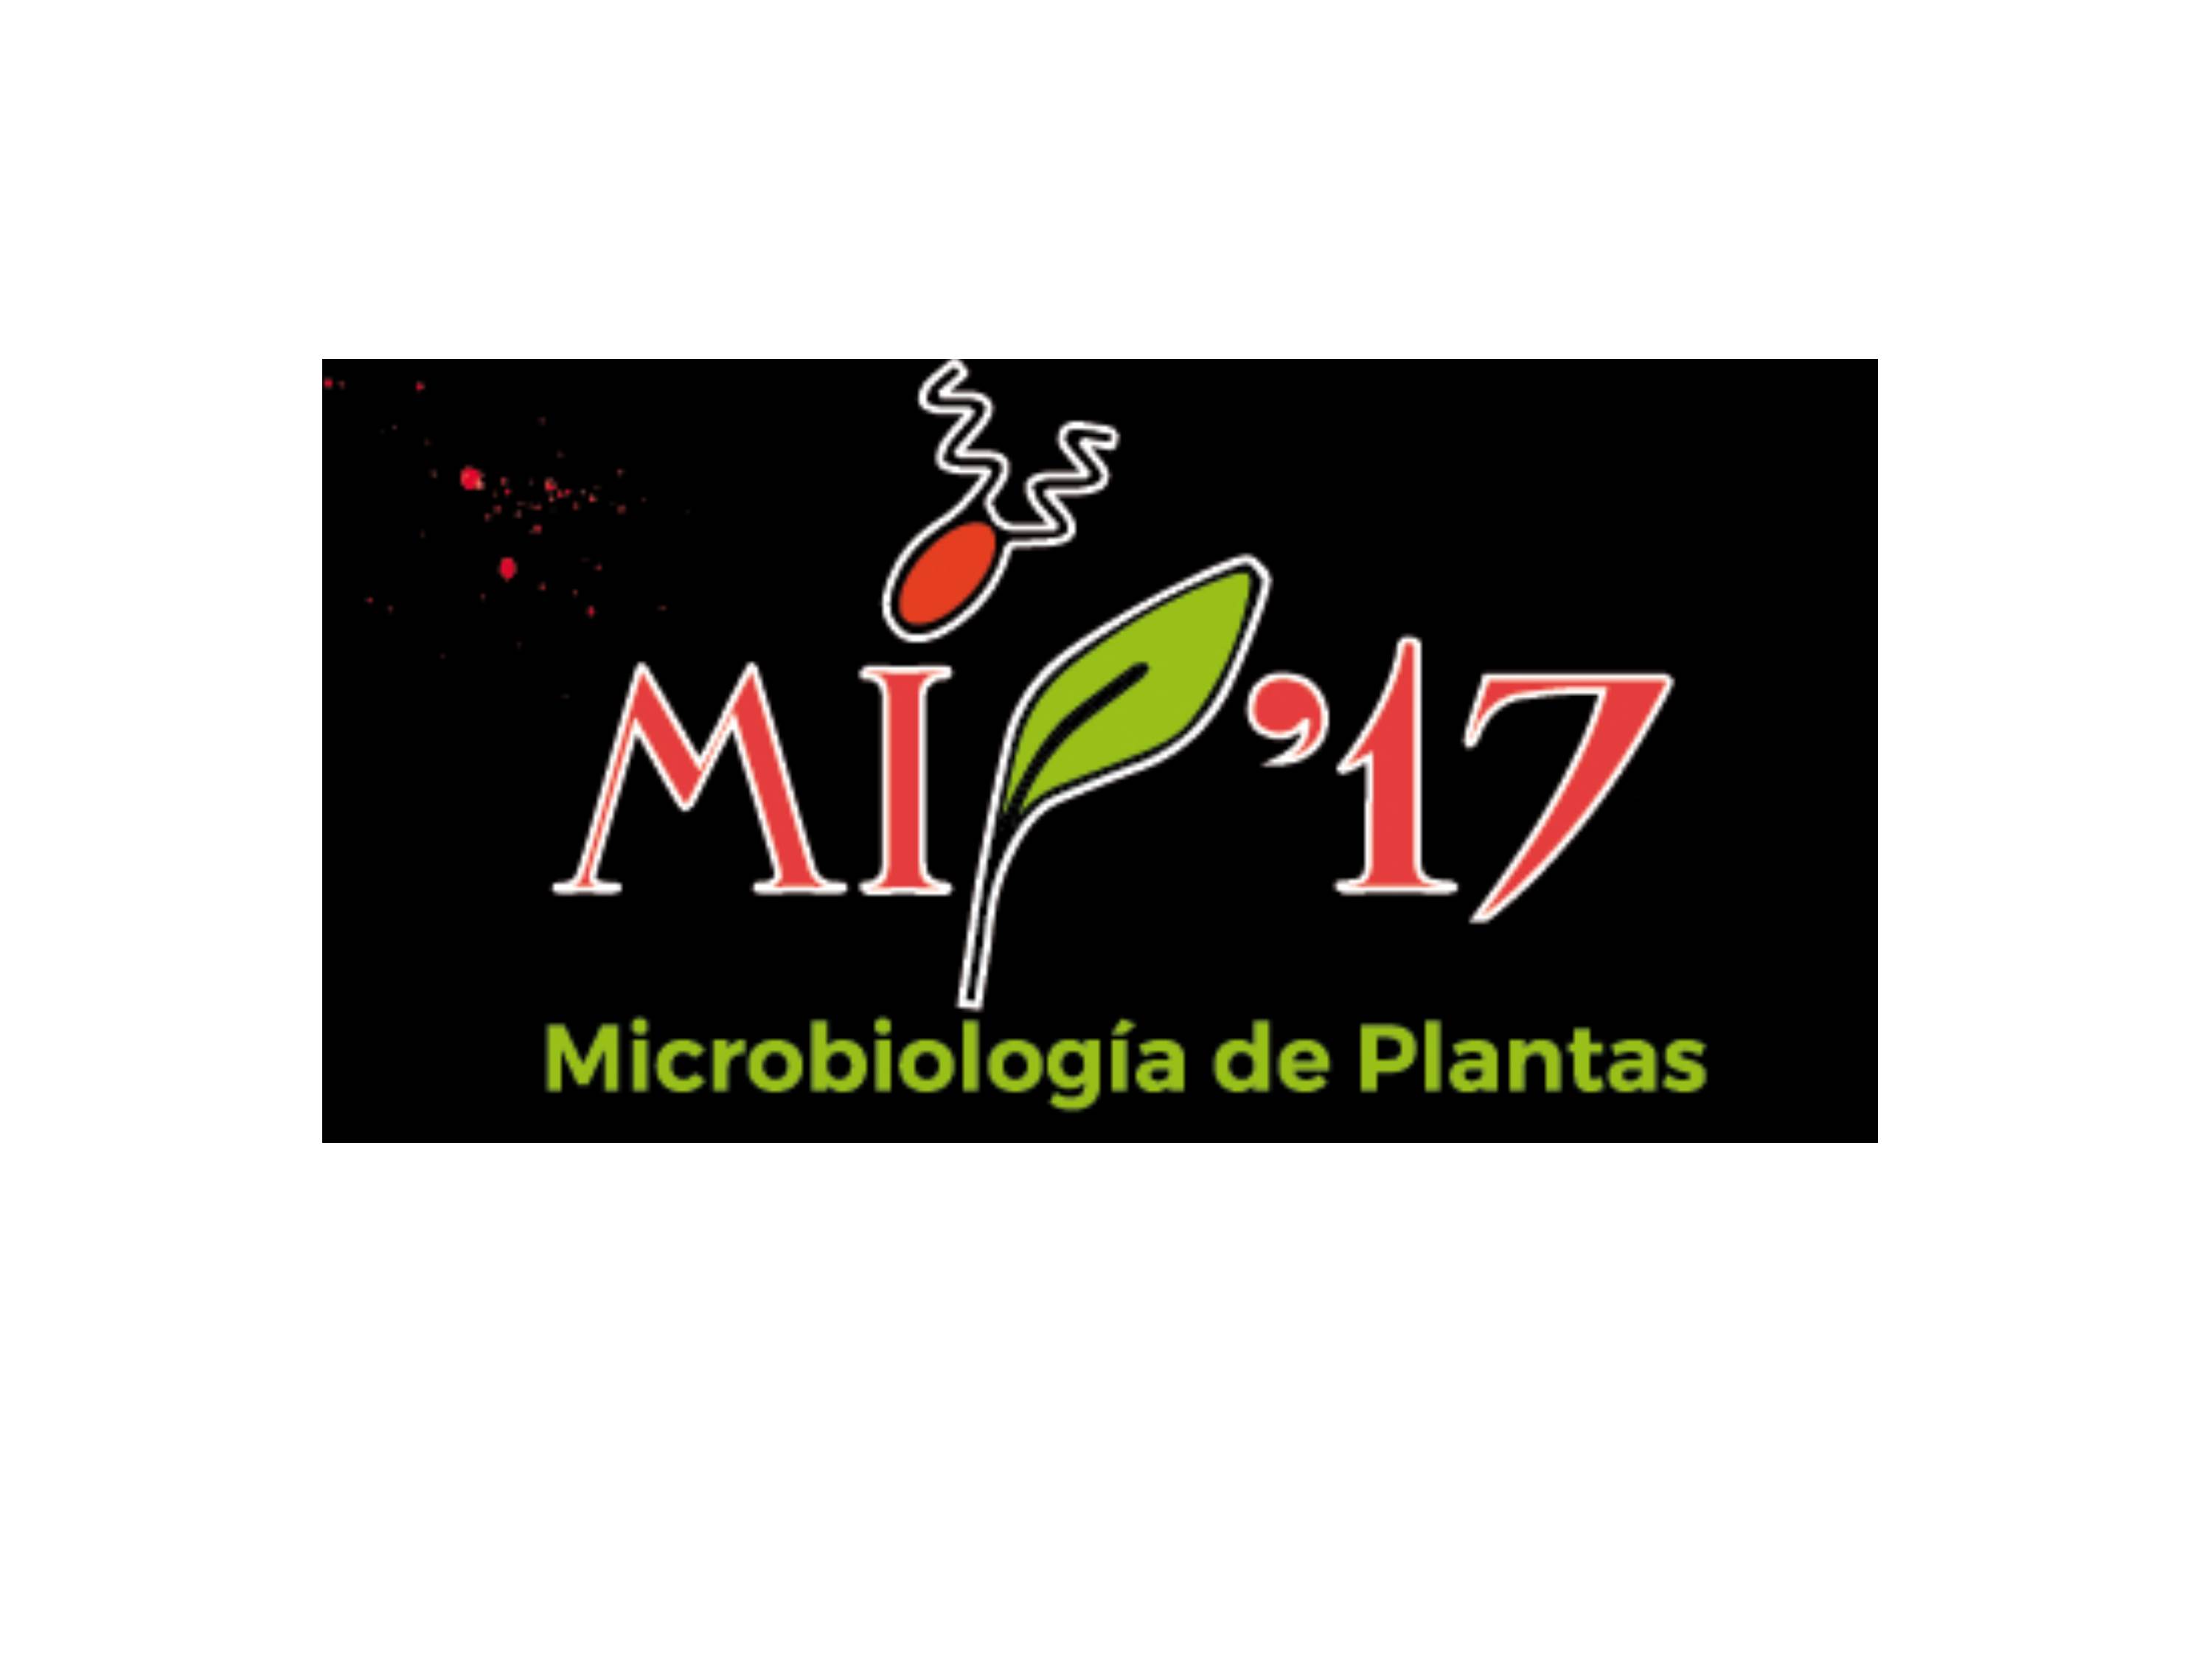 MIP17